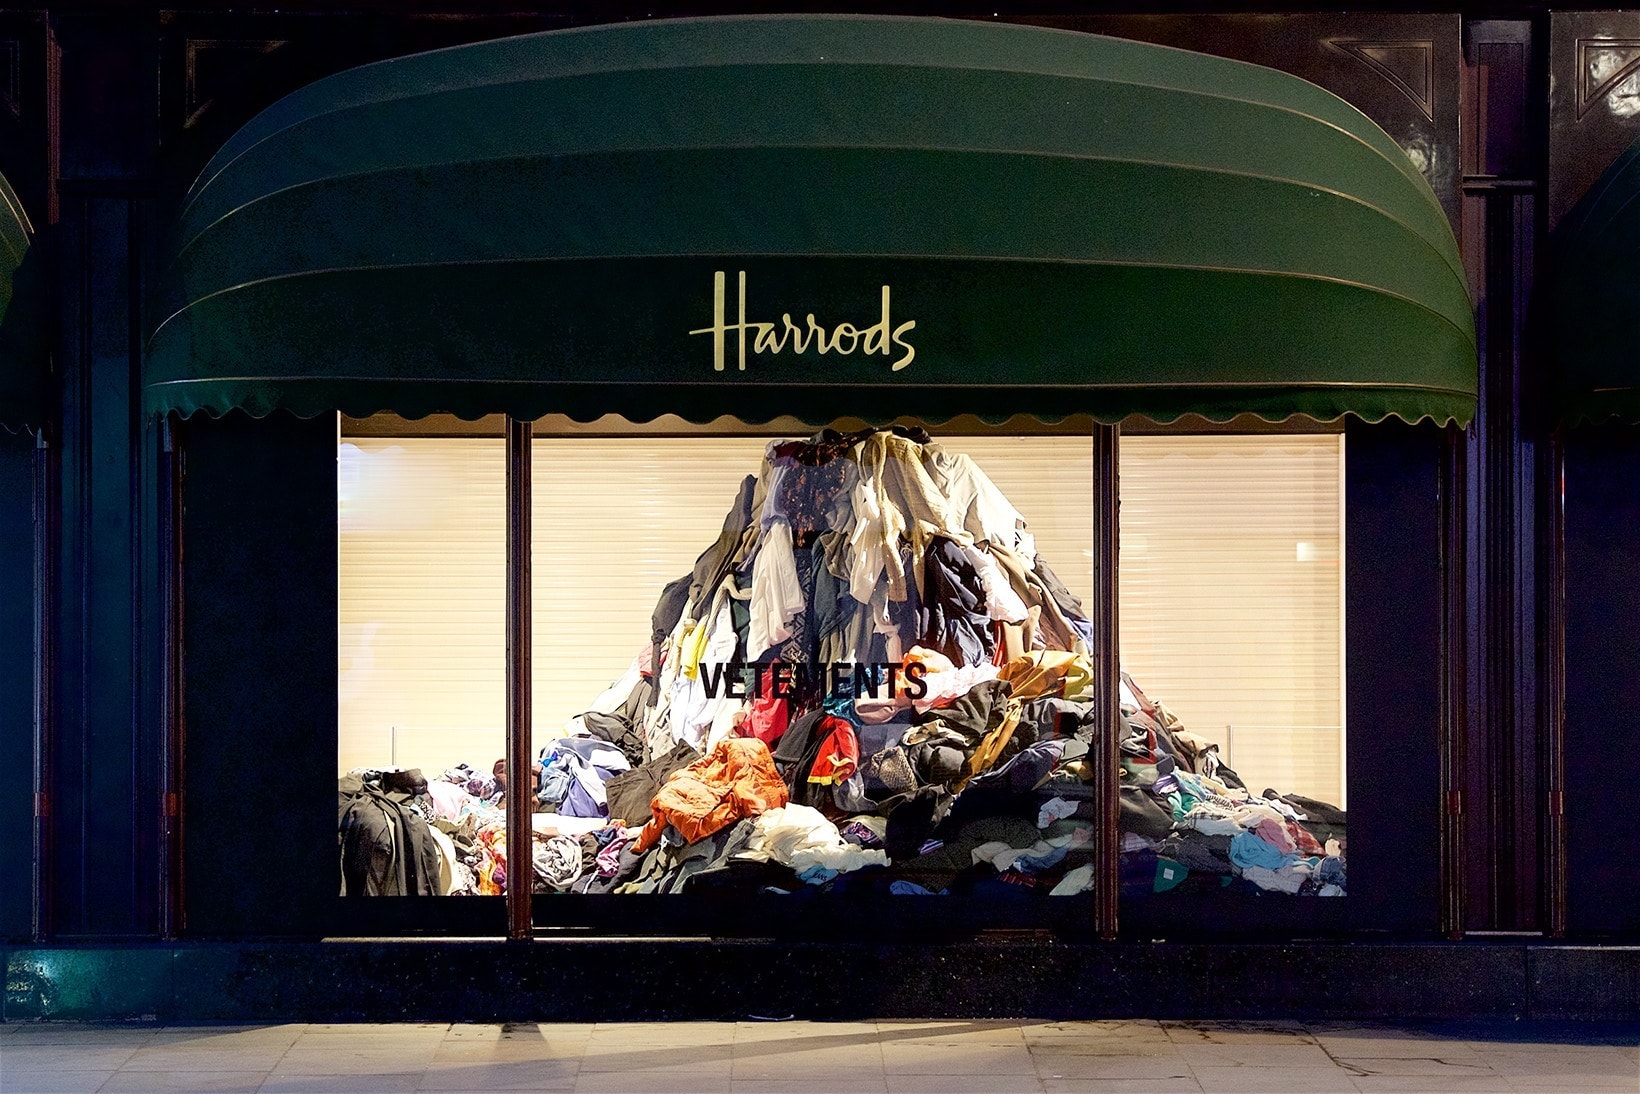 Vetements 為倫敦高級百貨 Harrods 設計廚窗發放環保訊息